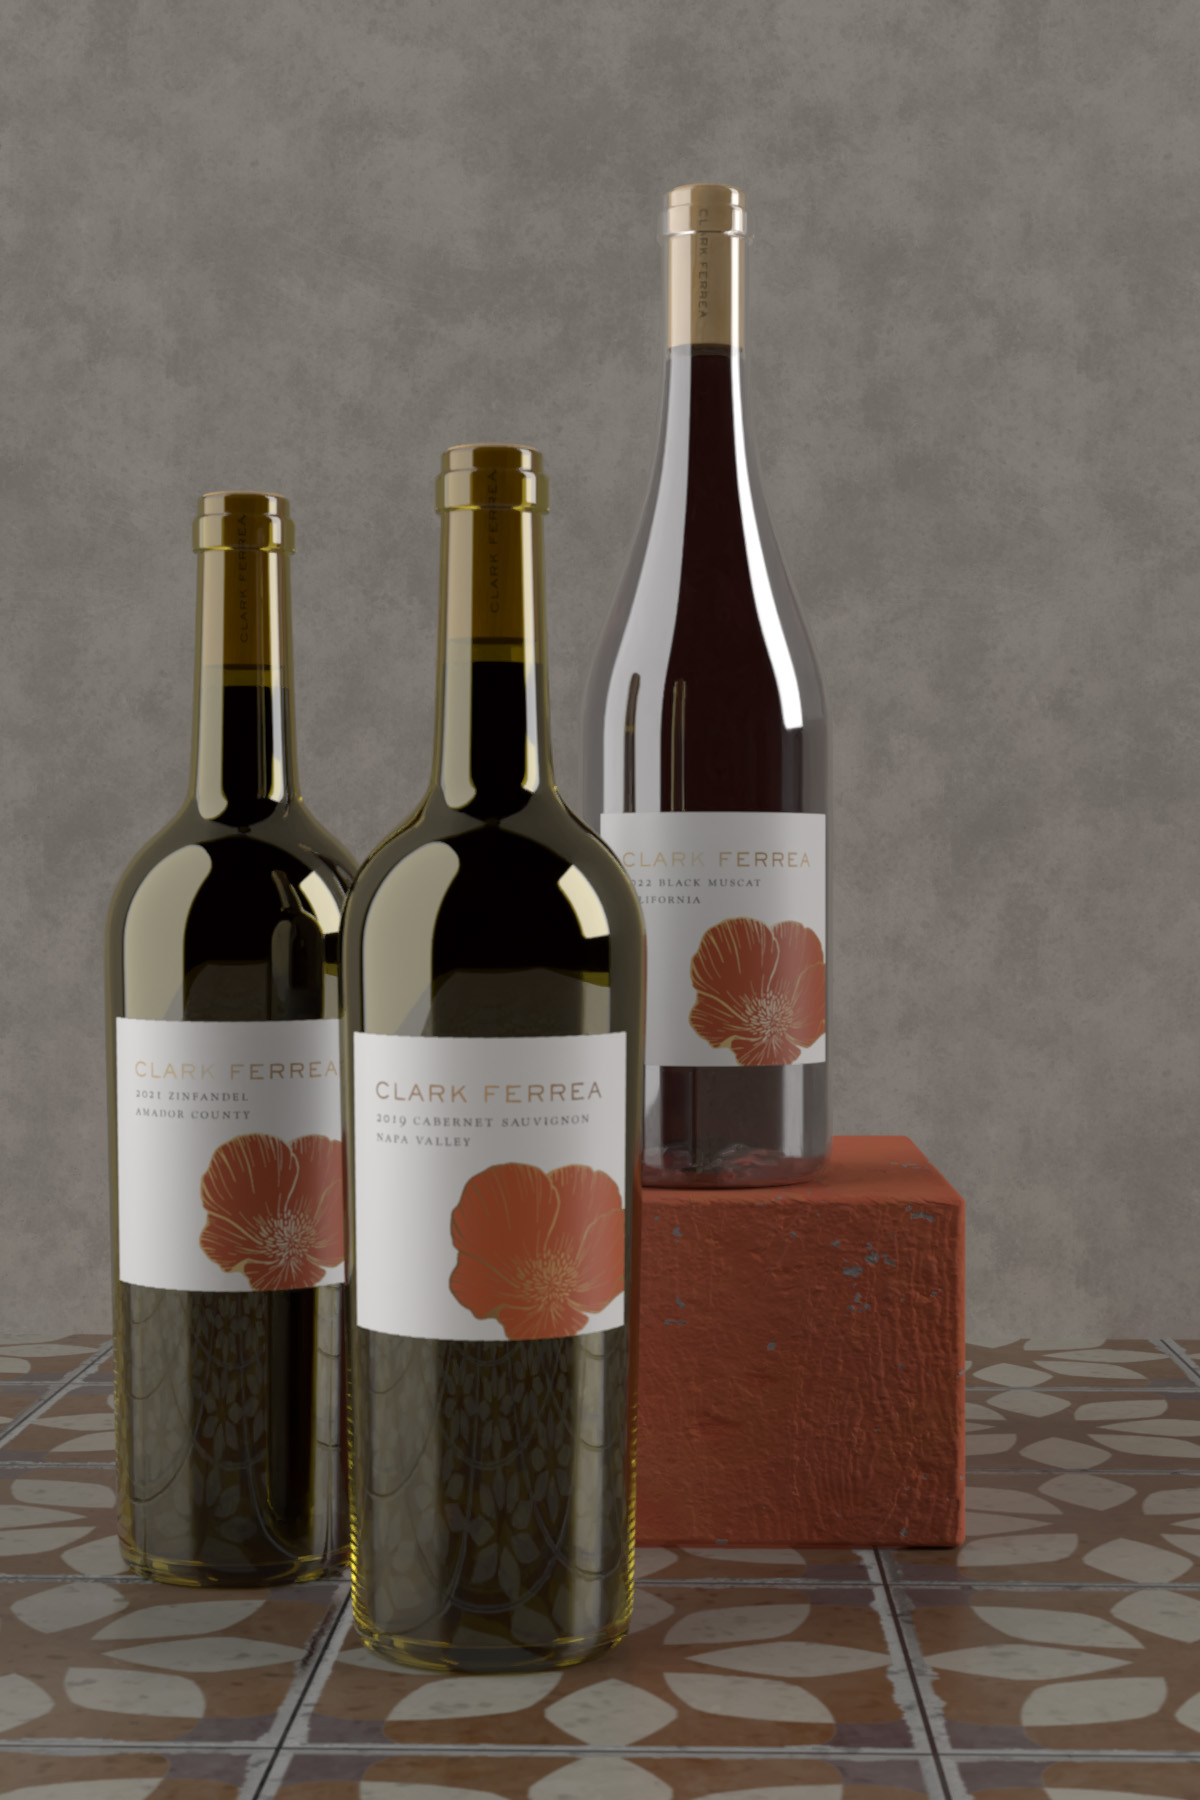 Example selection of Wine Club Trio, featuring three bottles of Clark Ferrea Wine